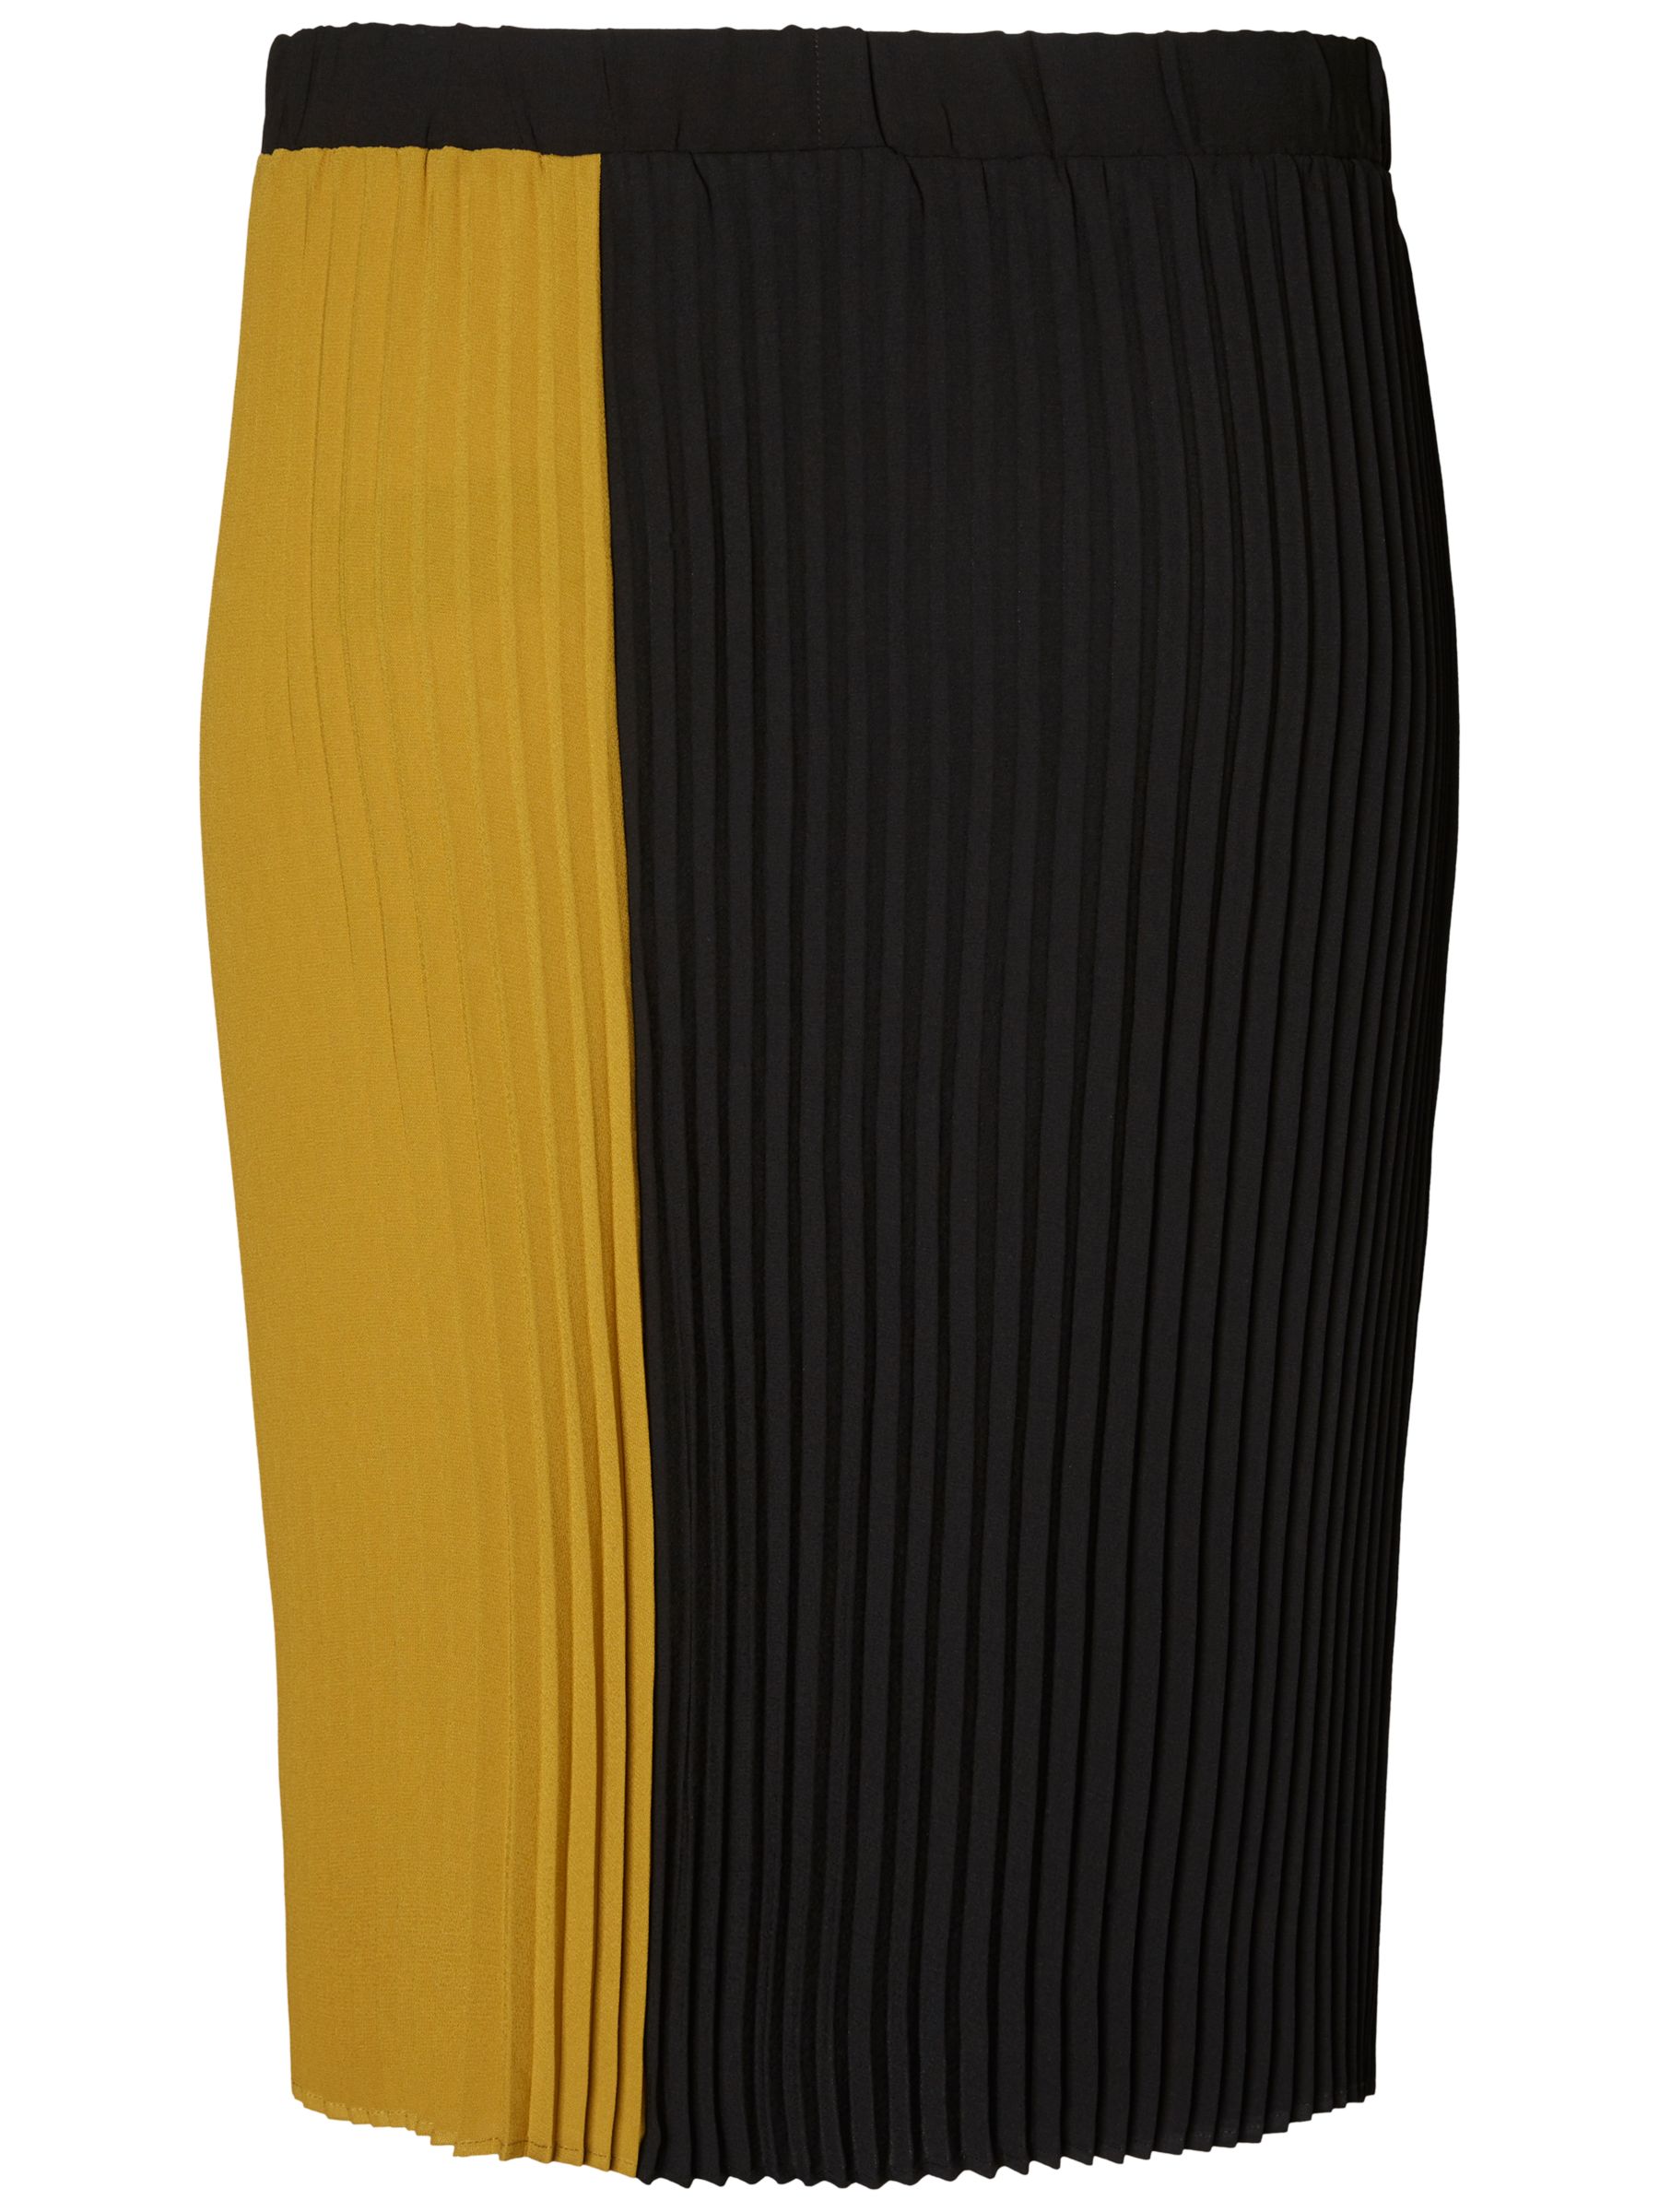 I.Scenery Curve Zilla Pleated Midi Skirt, Black/Ecru Olive